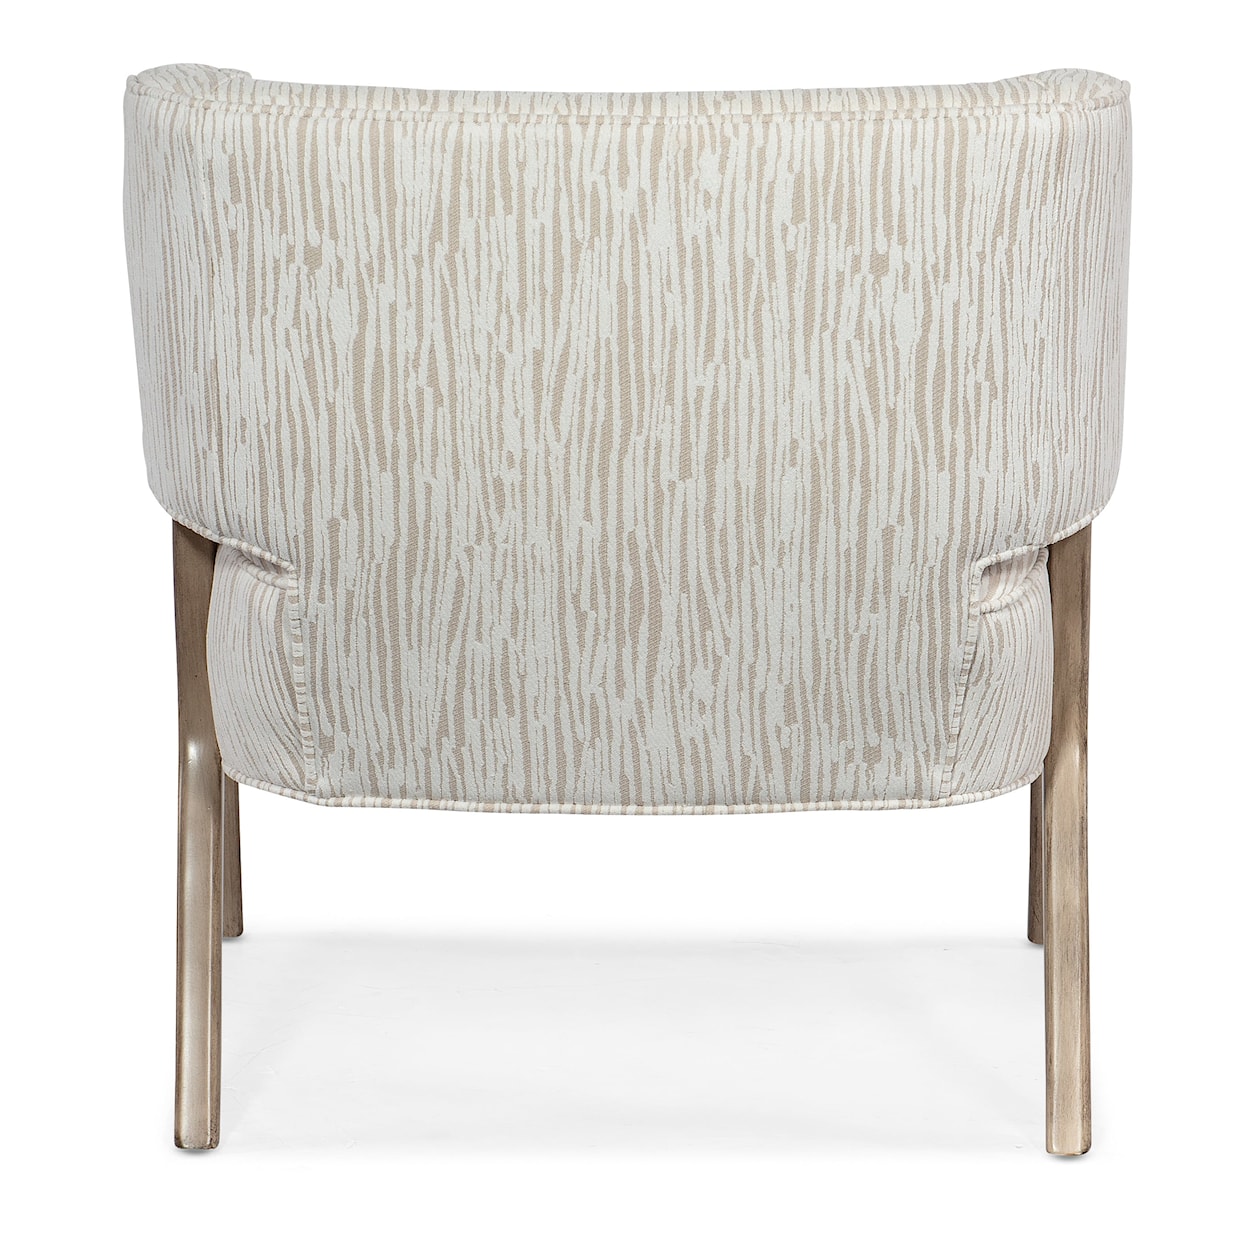 HF Custom Adkins Exposed Wood Chair